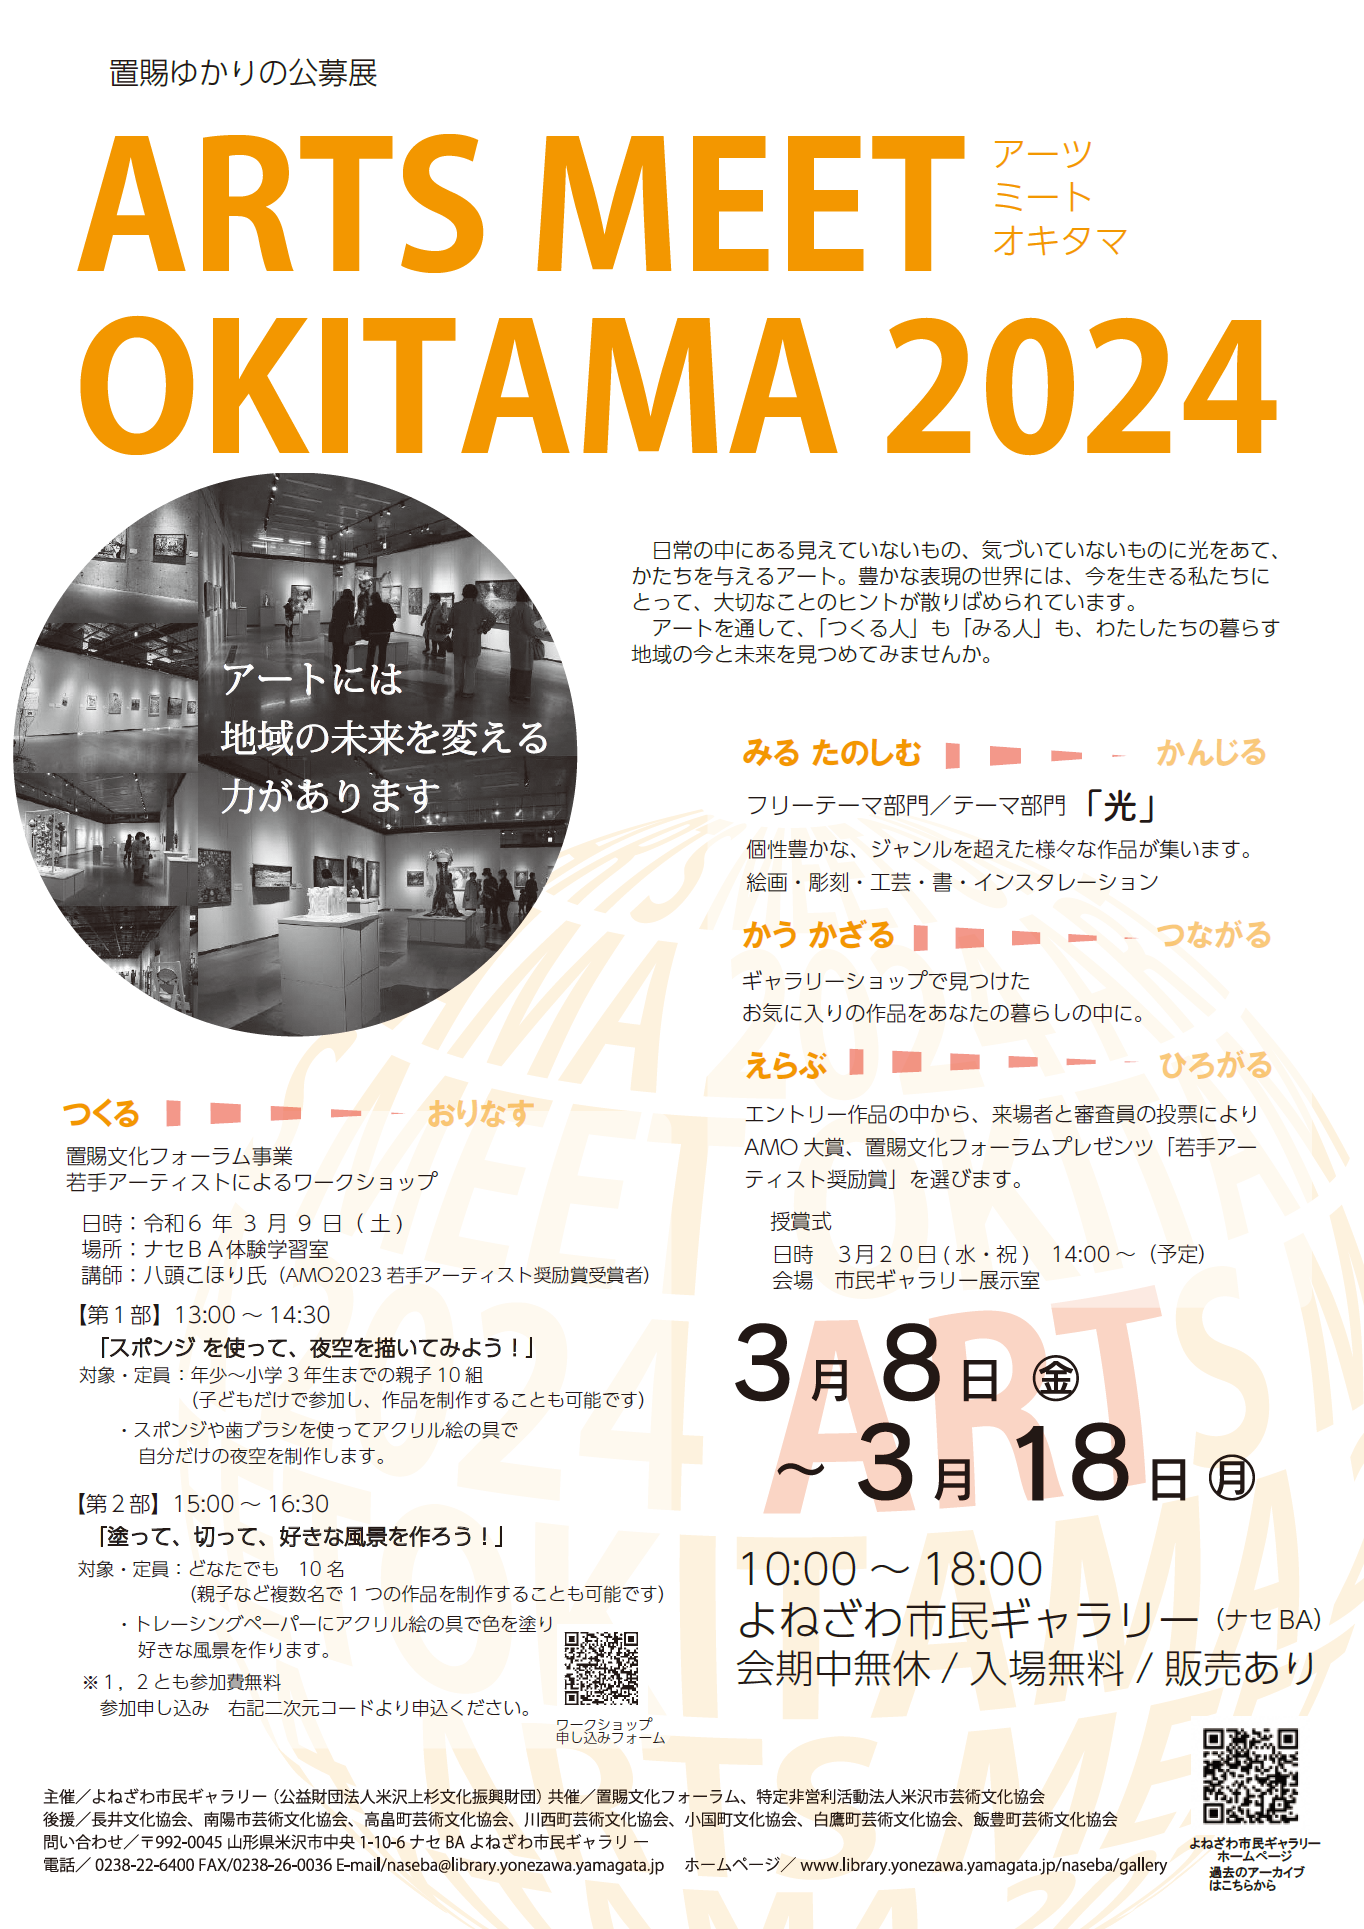 【「ARTS MEET OKITAMA2024」開催のお知らせ】